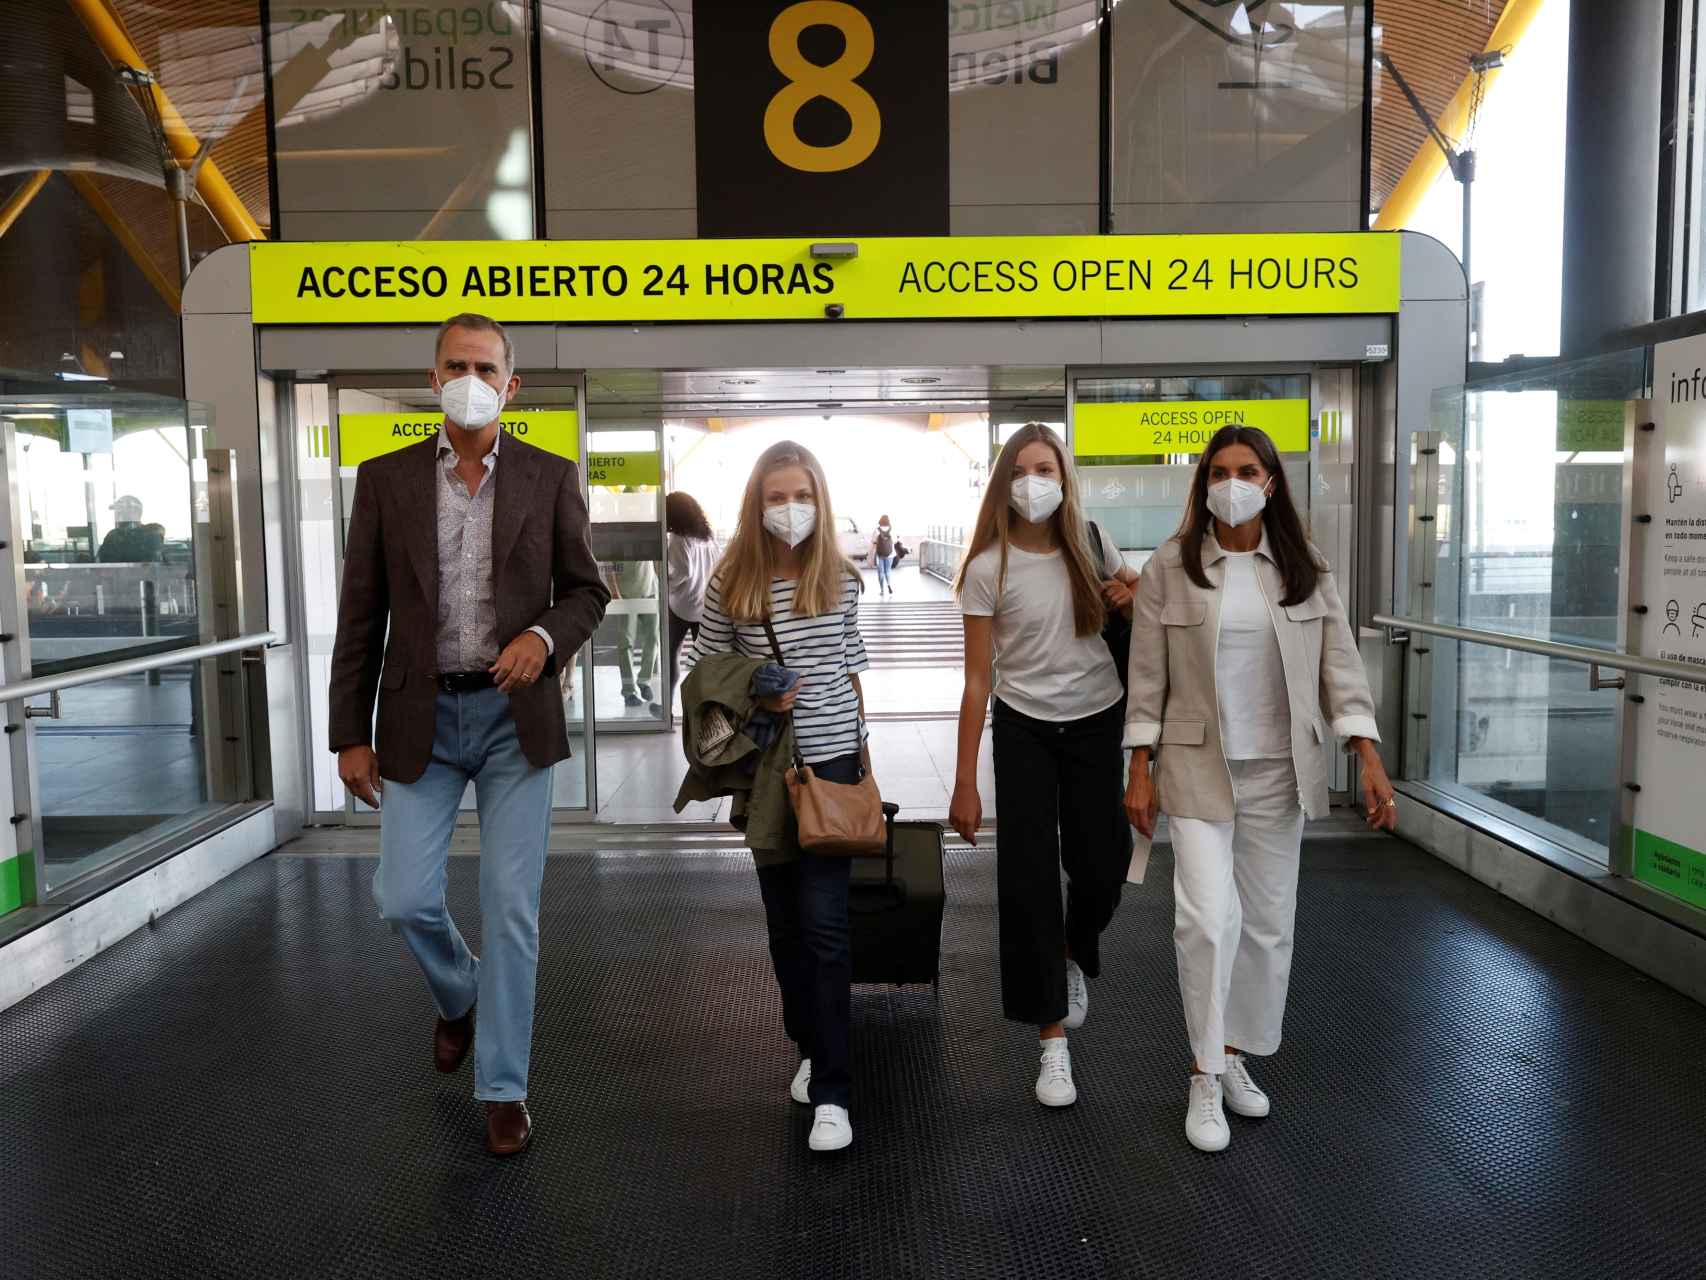 La Familia Real llega al aeropuerto Adolfo Suárez-Madrid Barajas.